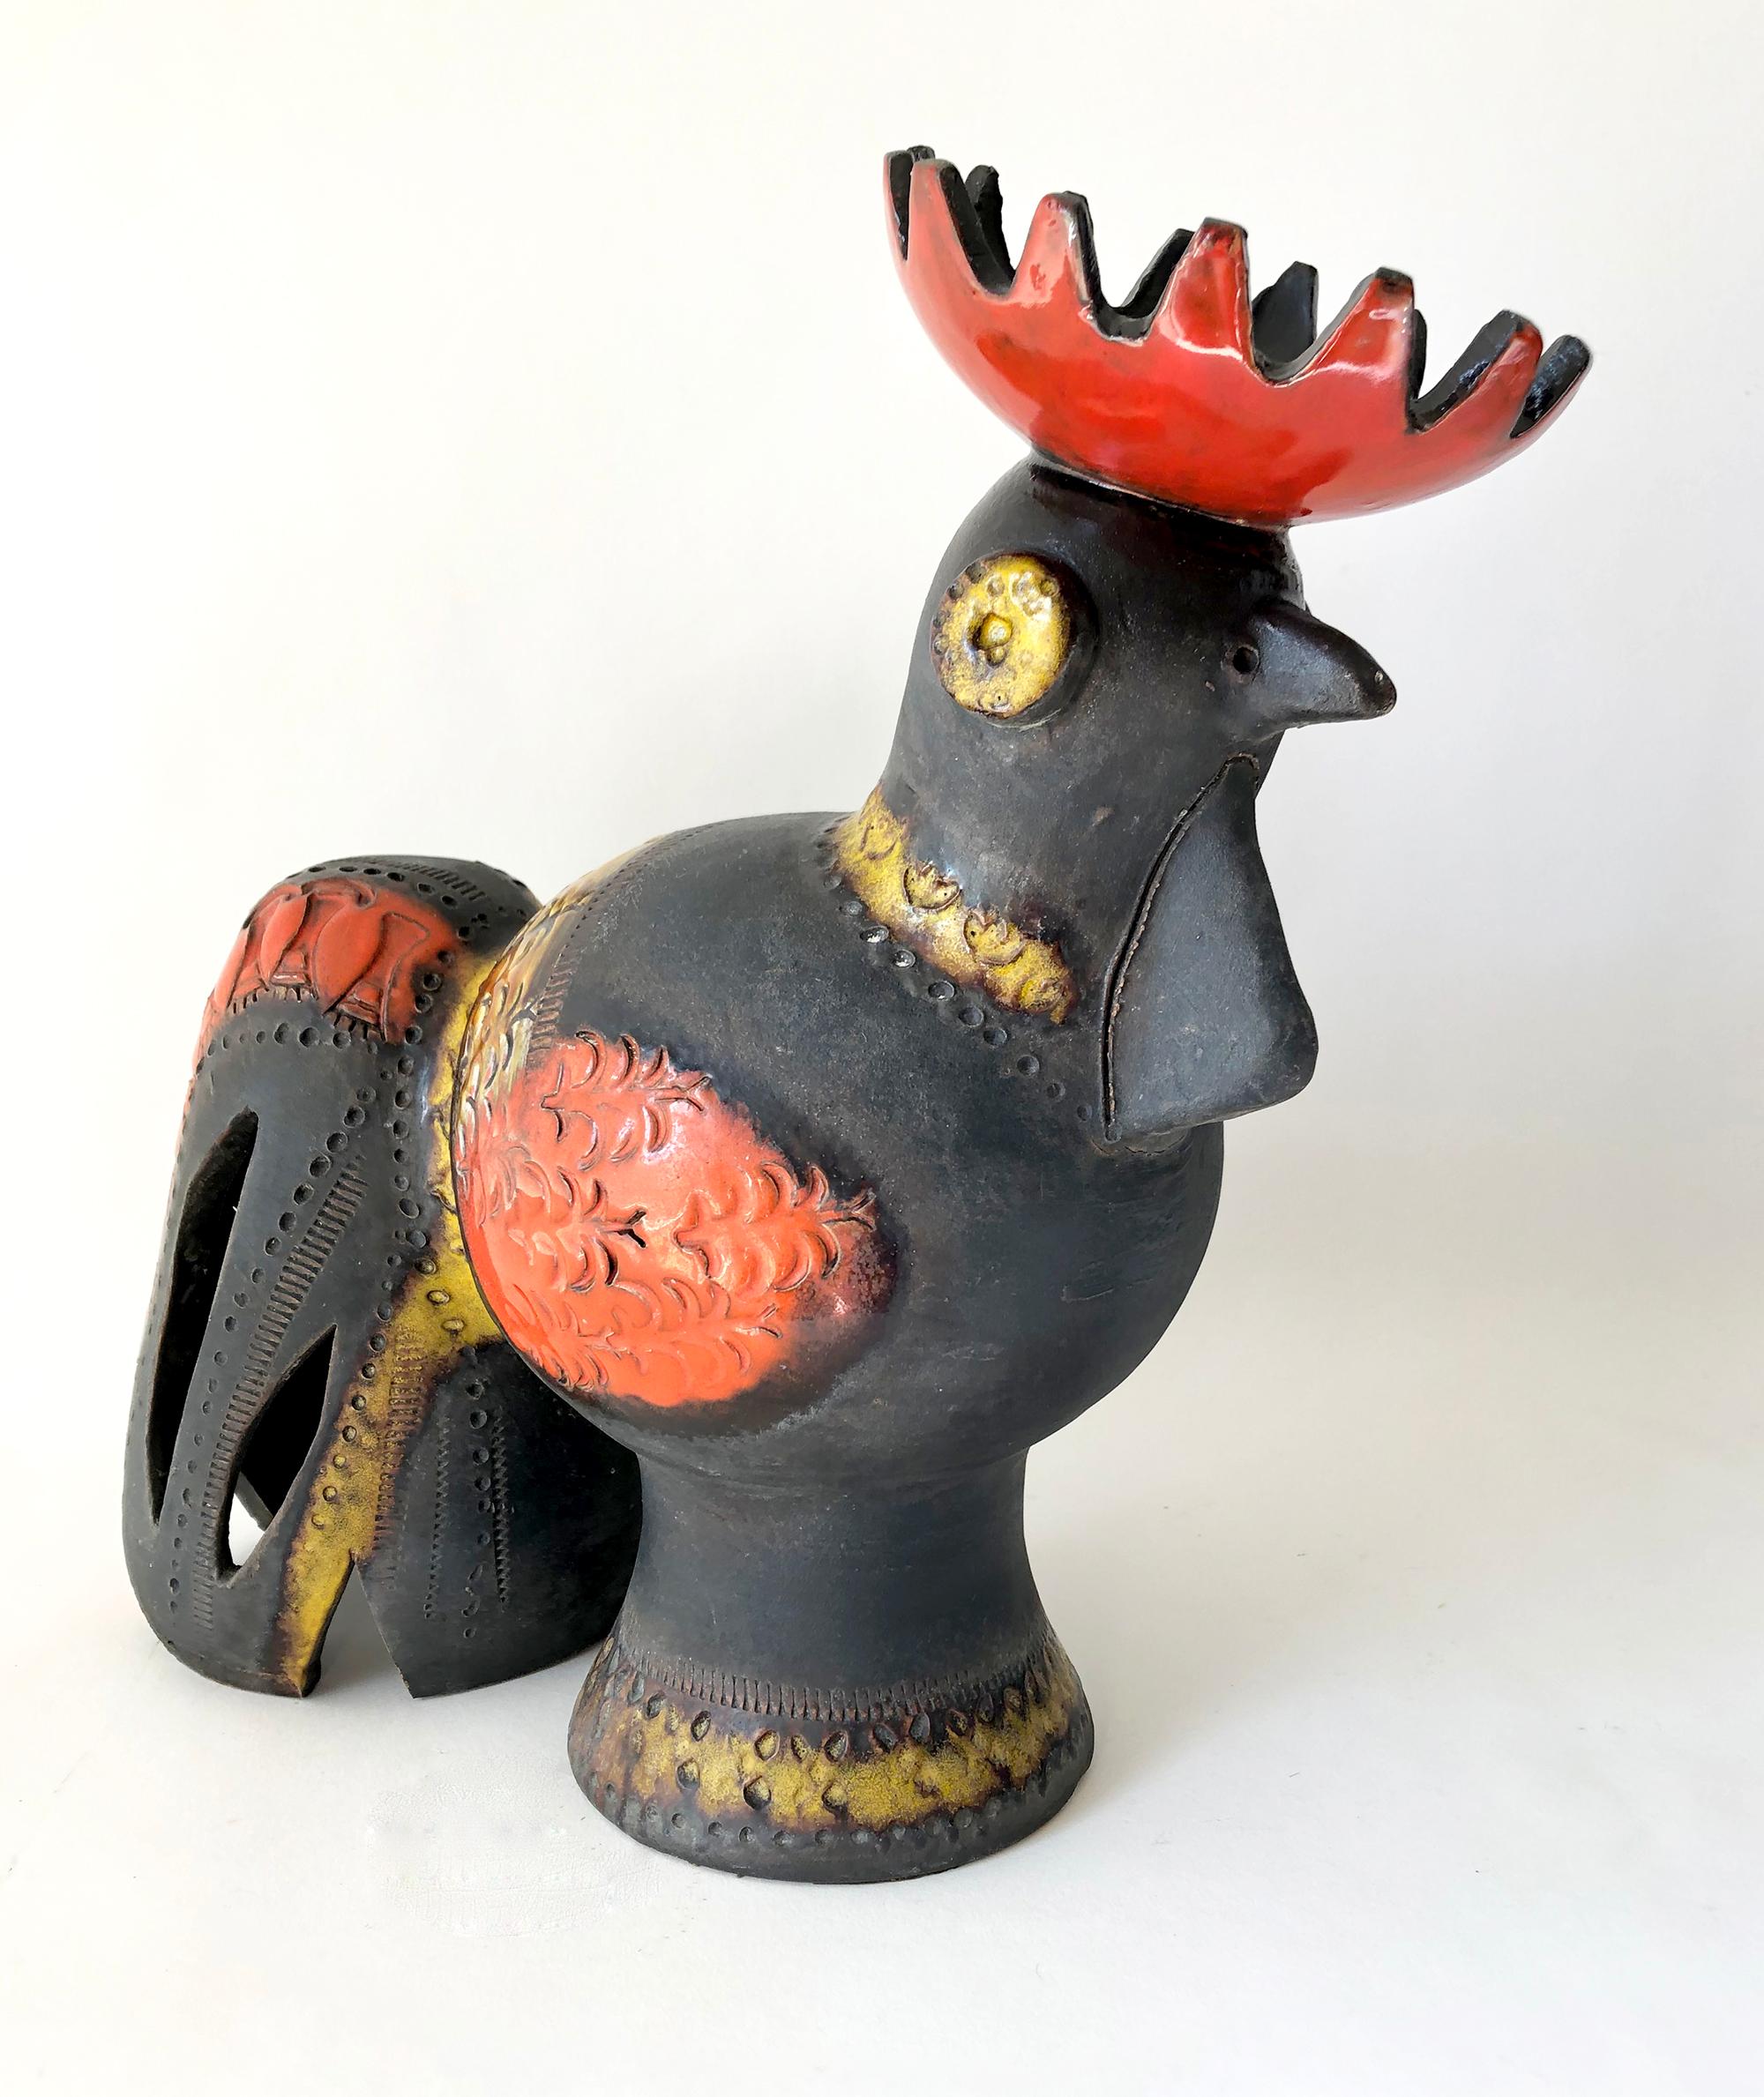 Aldo Londi for Bitossi rooster ceramic sculpture, circa 1960s. Rooster measures 12.5